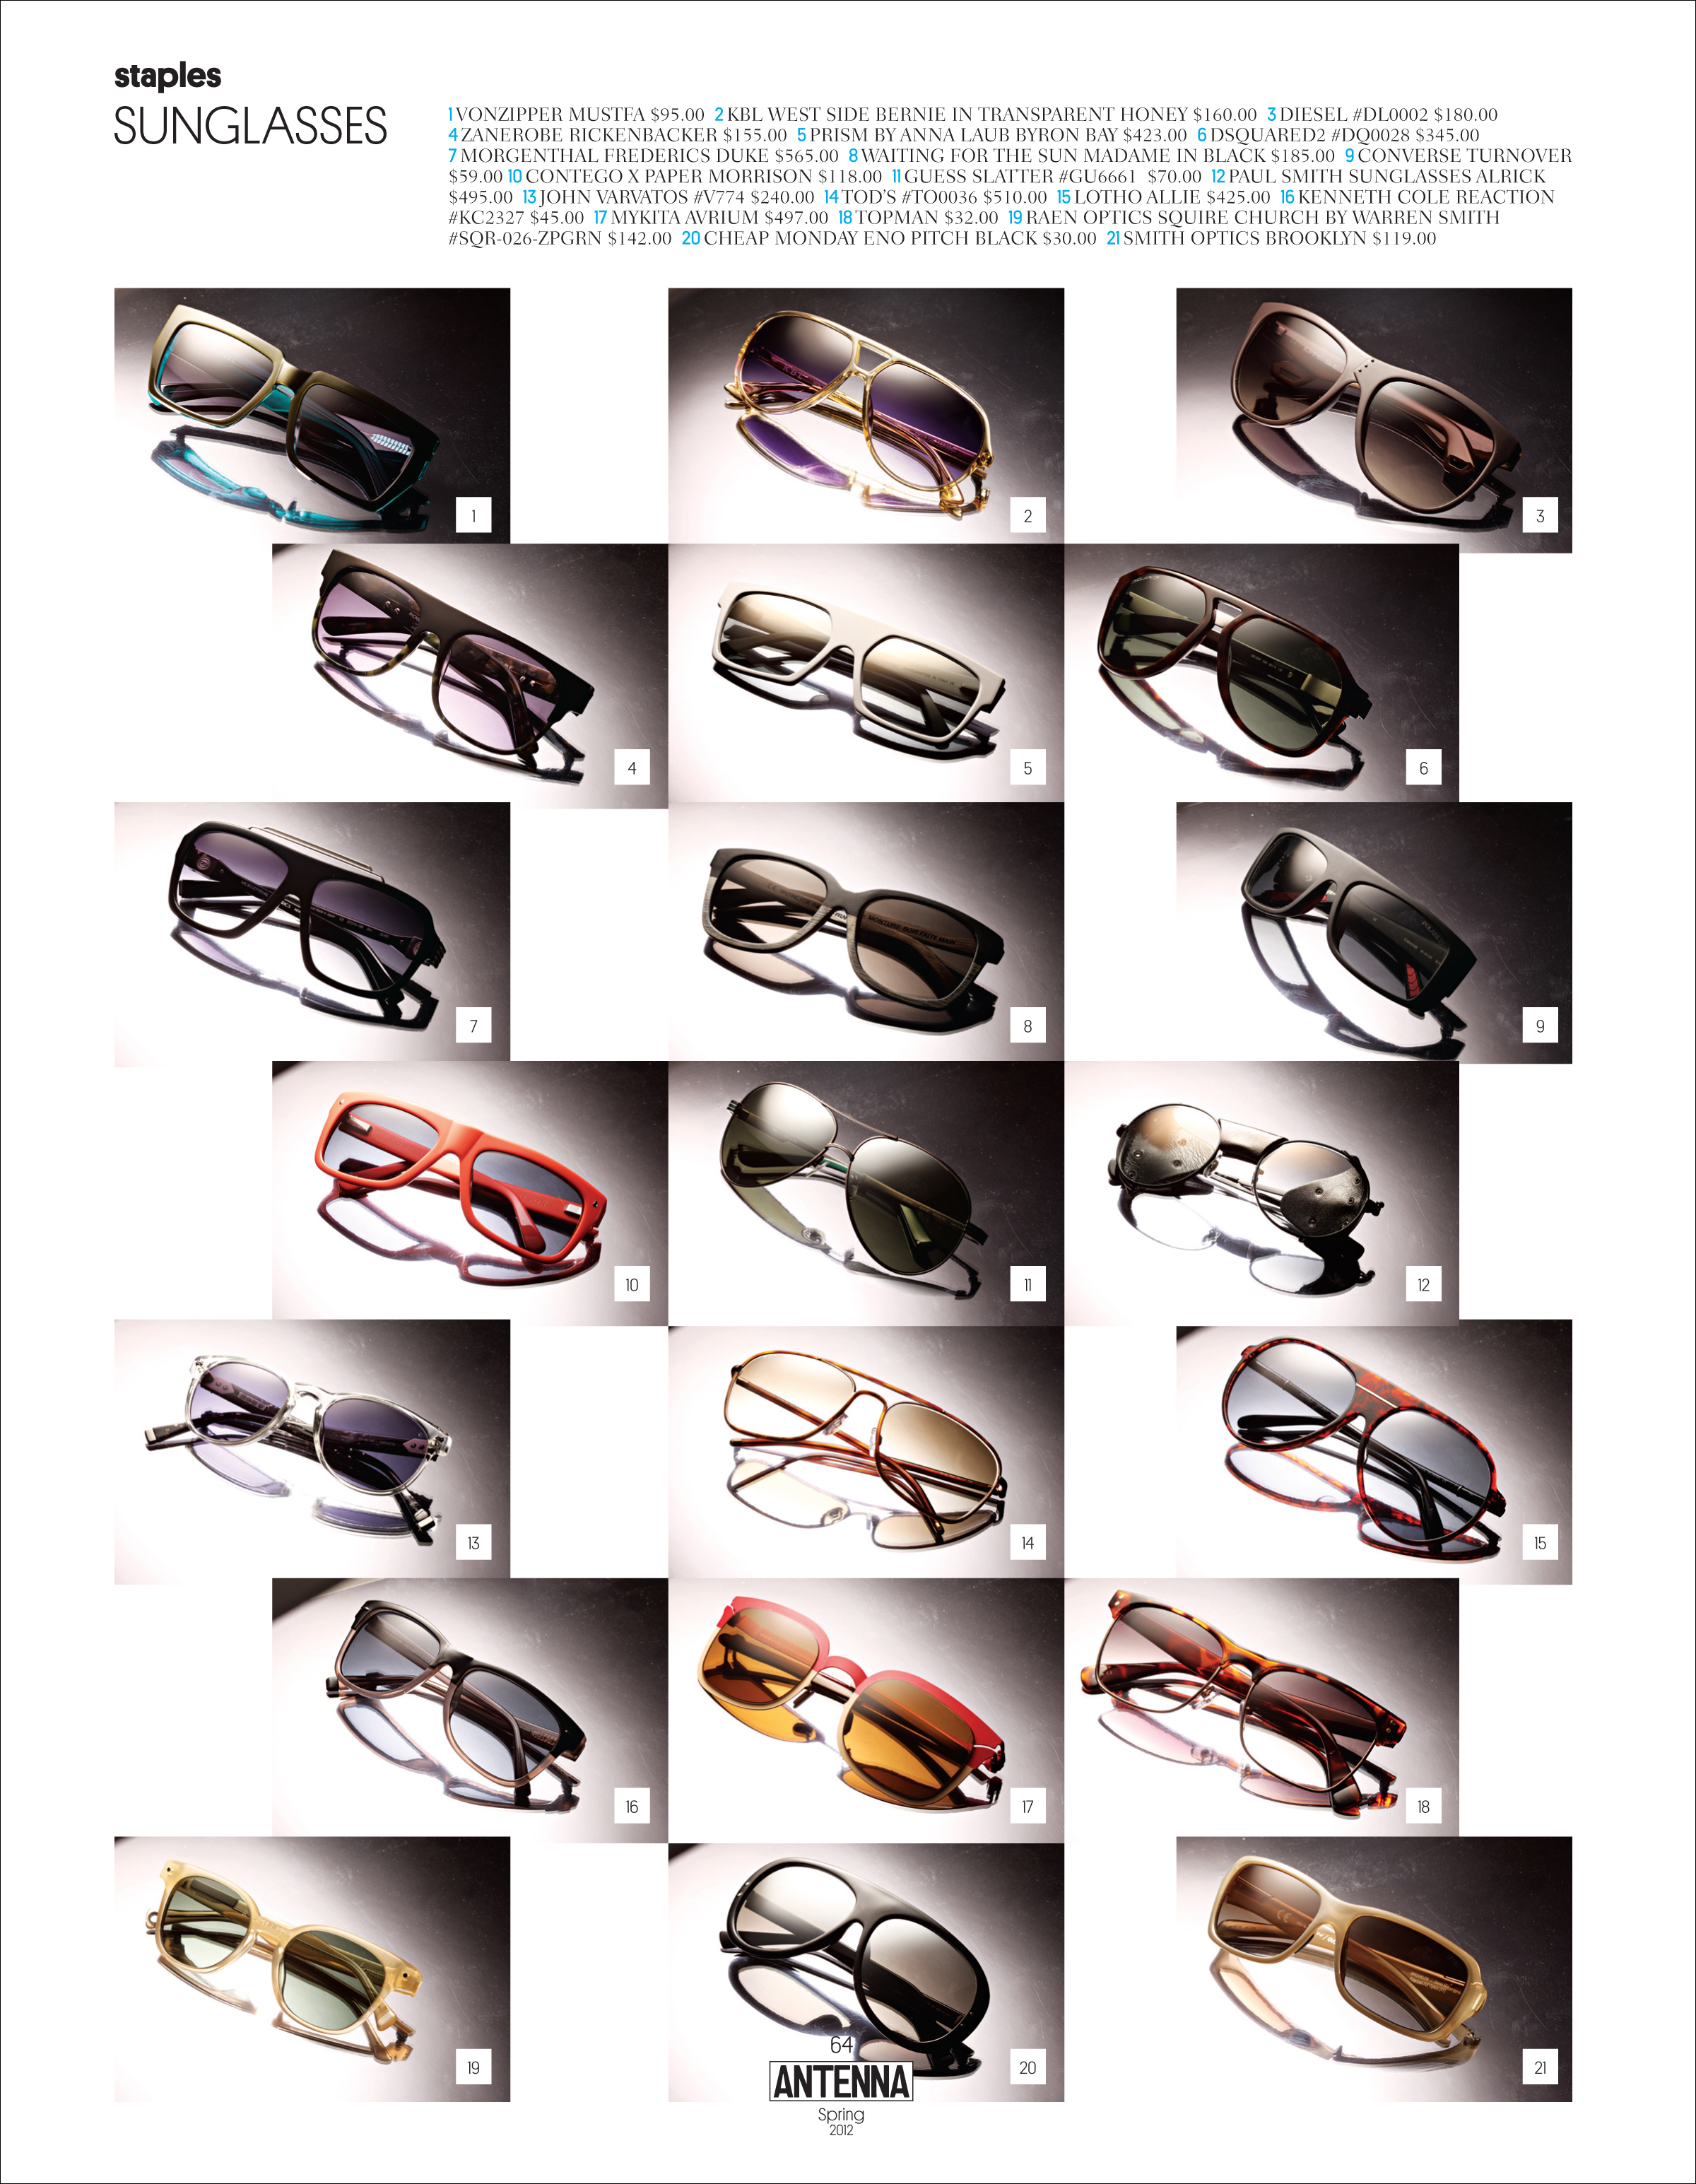 19 s sunglasses.jpg